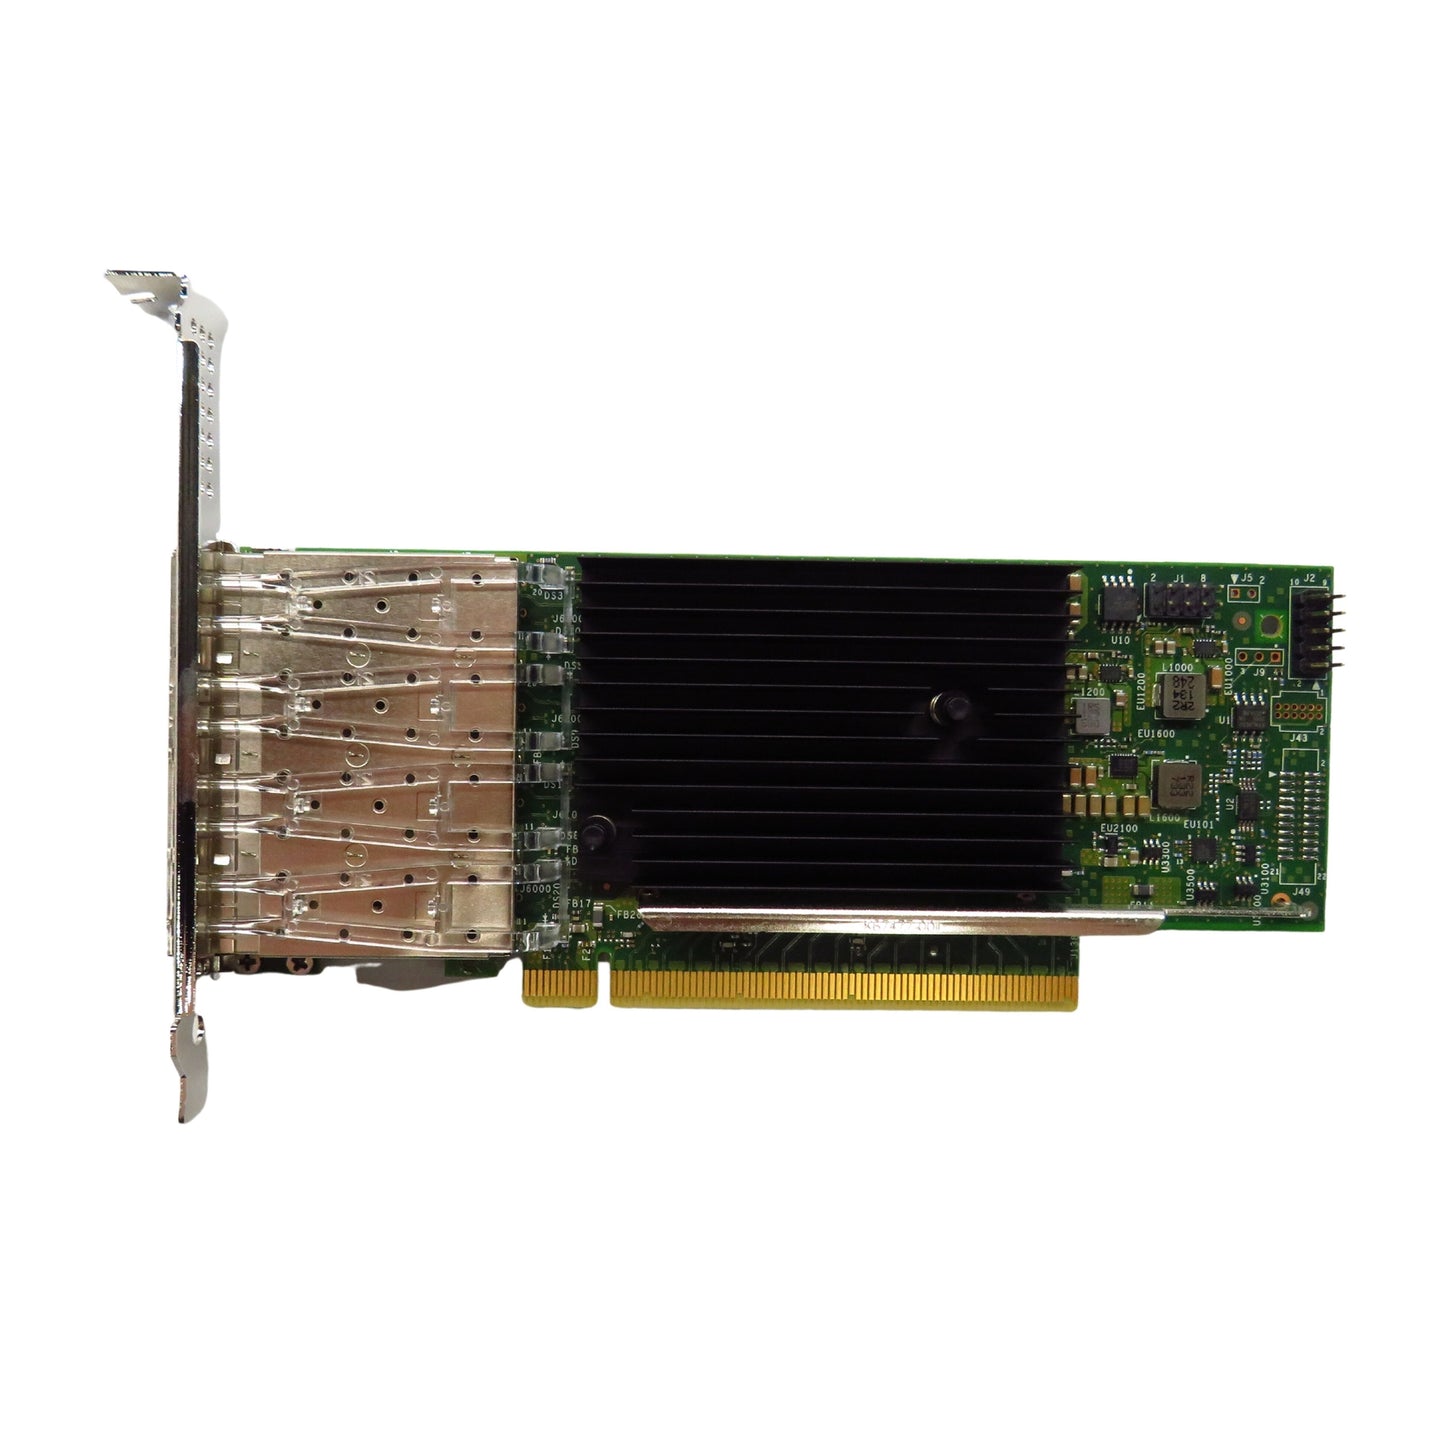 Intel E810-XXVDA4 E810XXVDA4LG1P5 Quad Port 25GbE PCI-E 4.0 NIC Server Adapter (Refurbished)